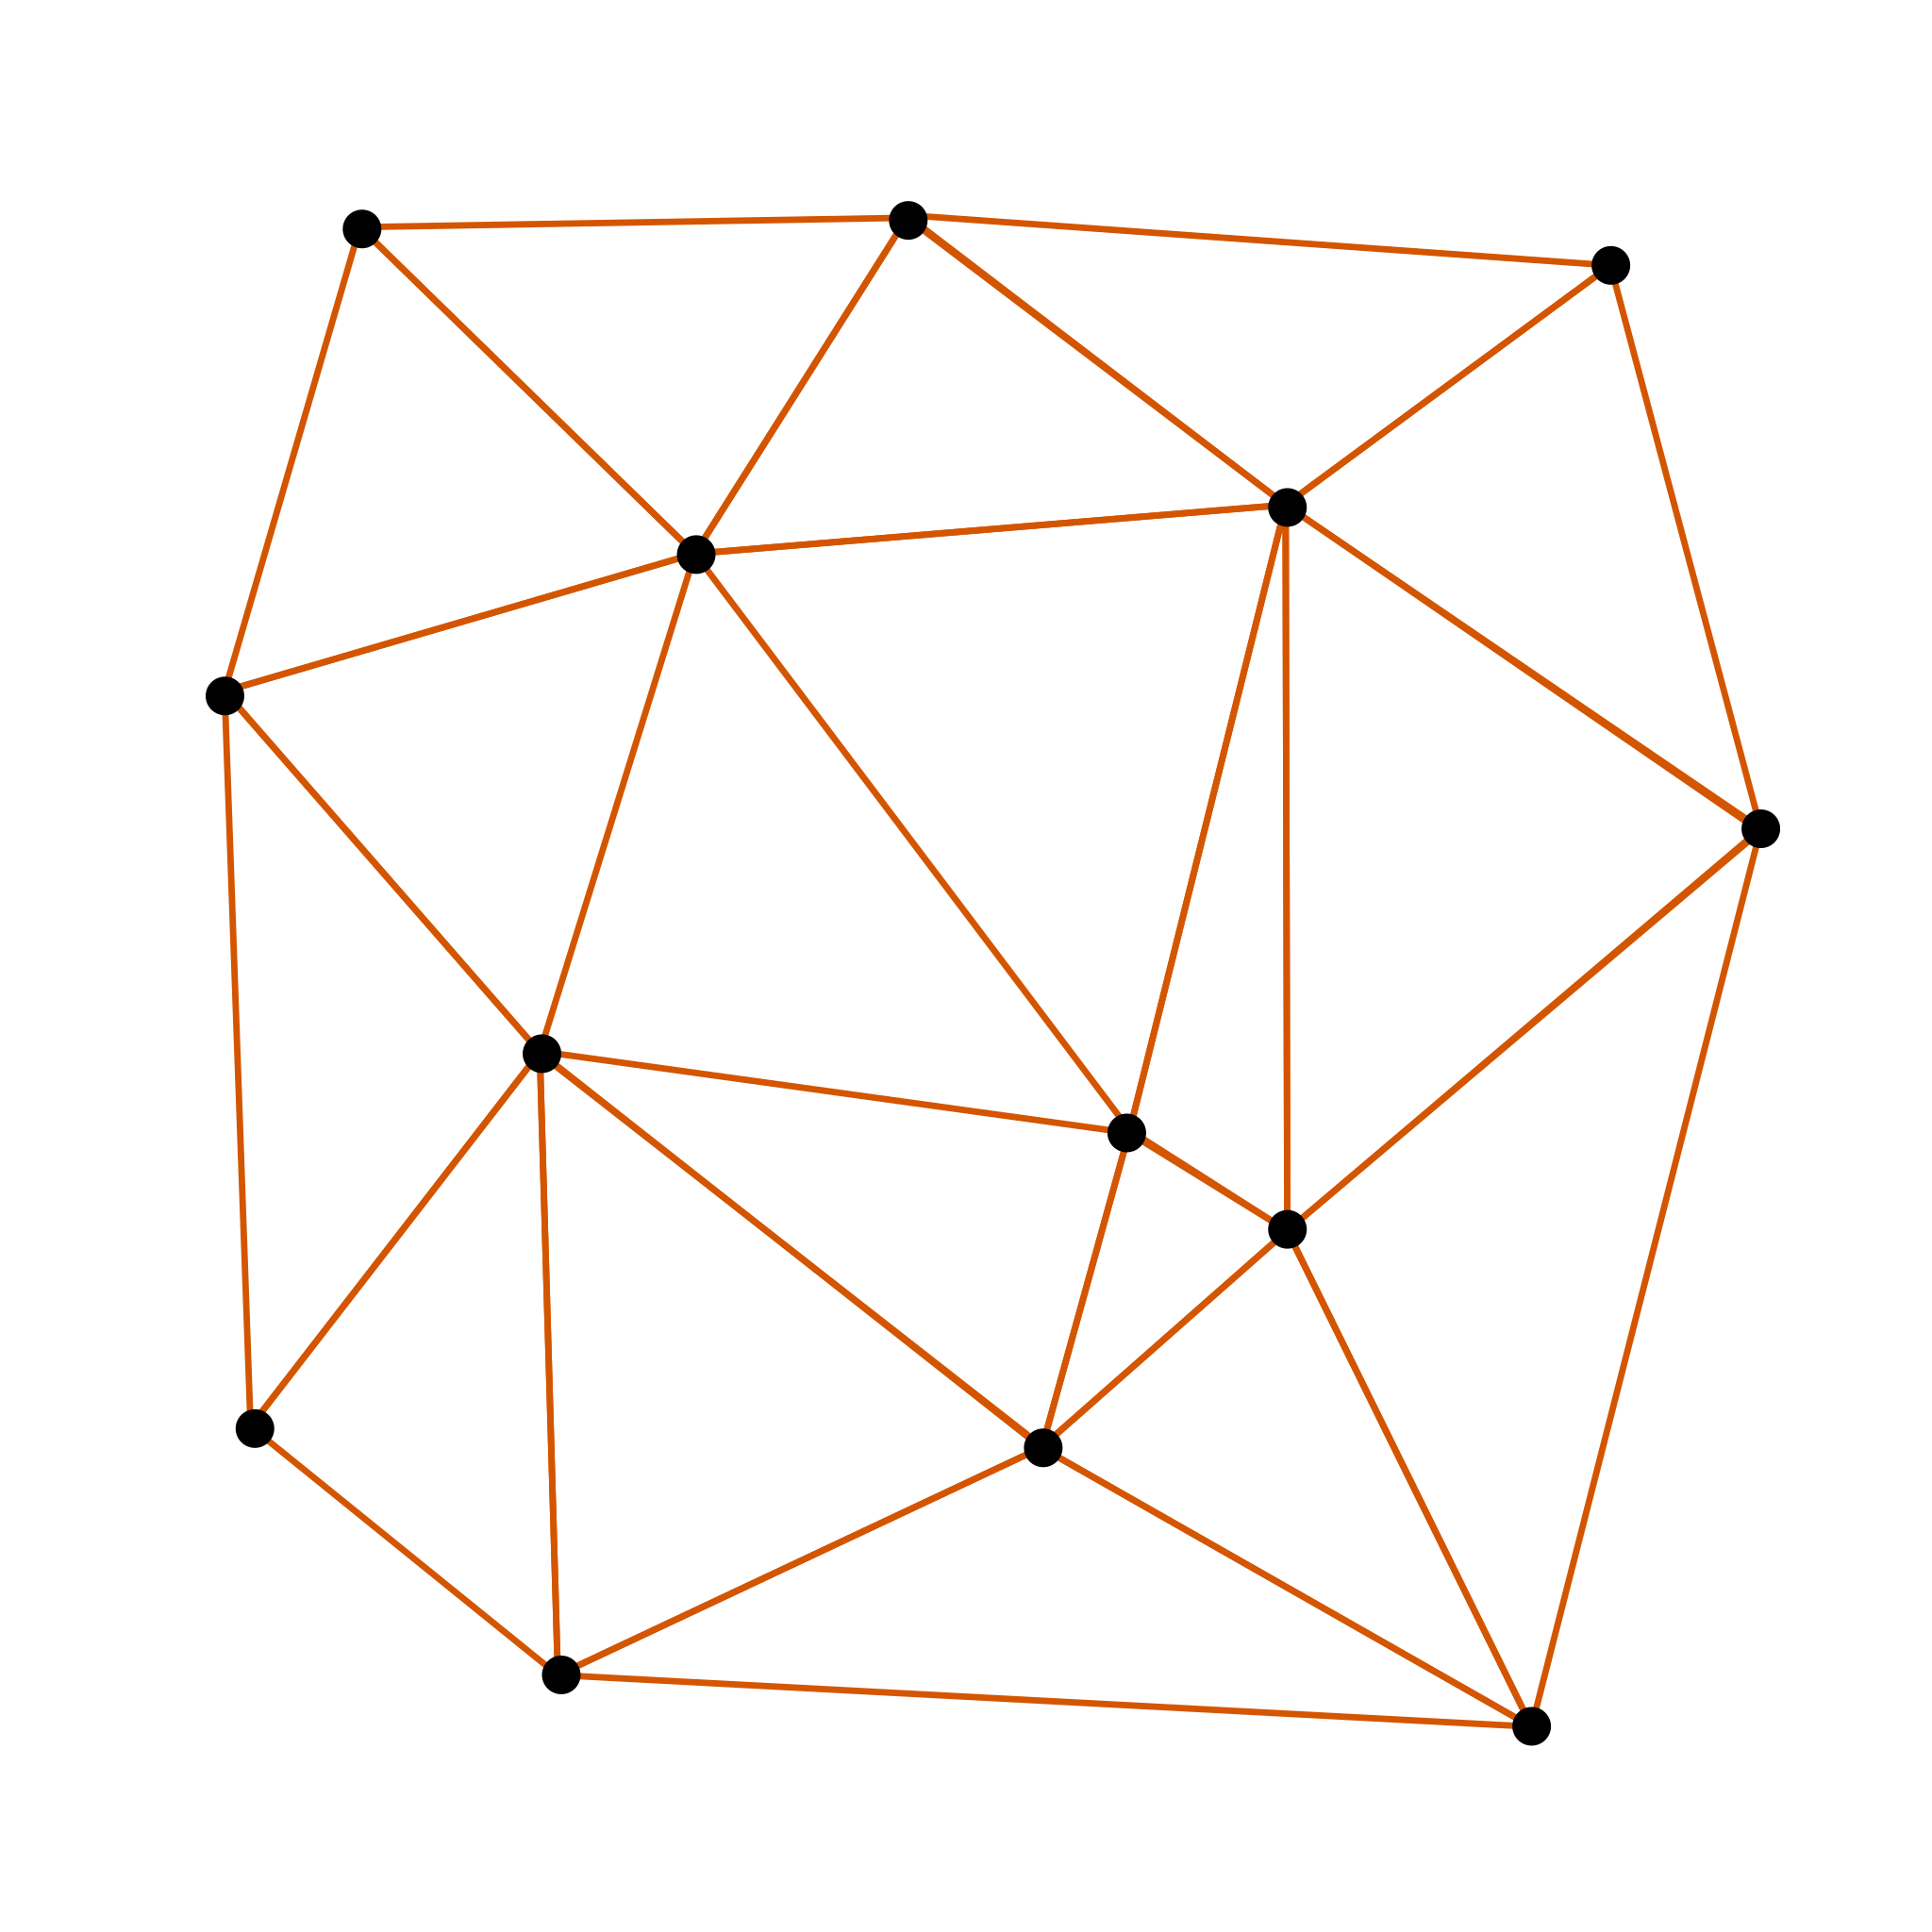 File:Delaunay Triangulation (100 Points).svg - Wikipedia